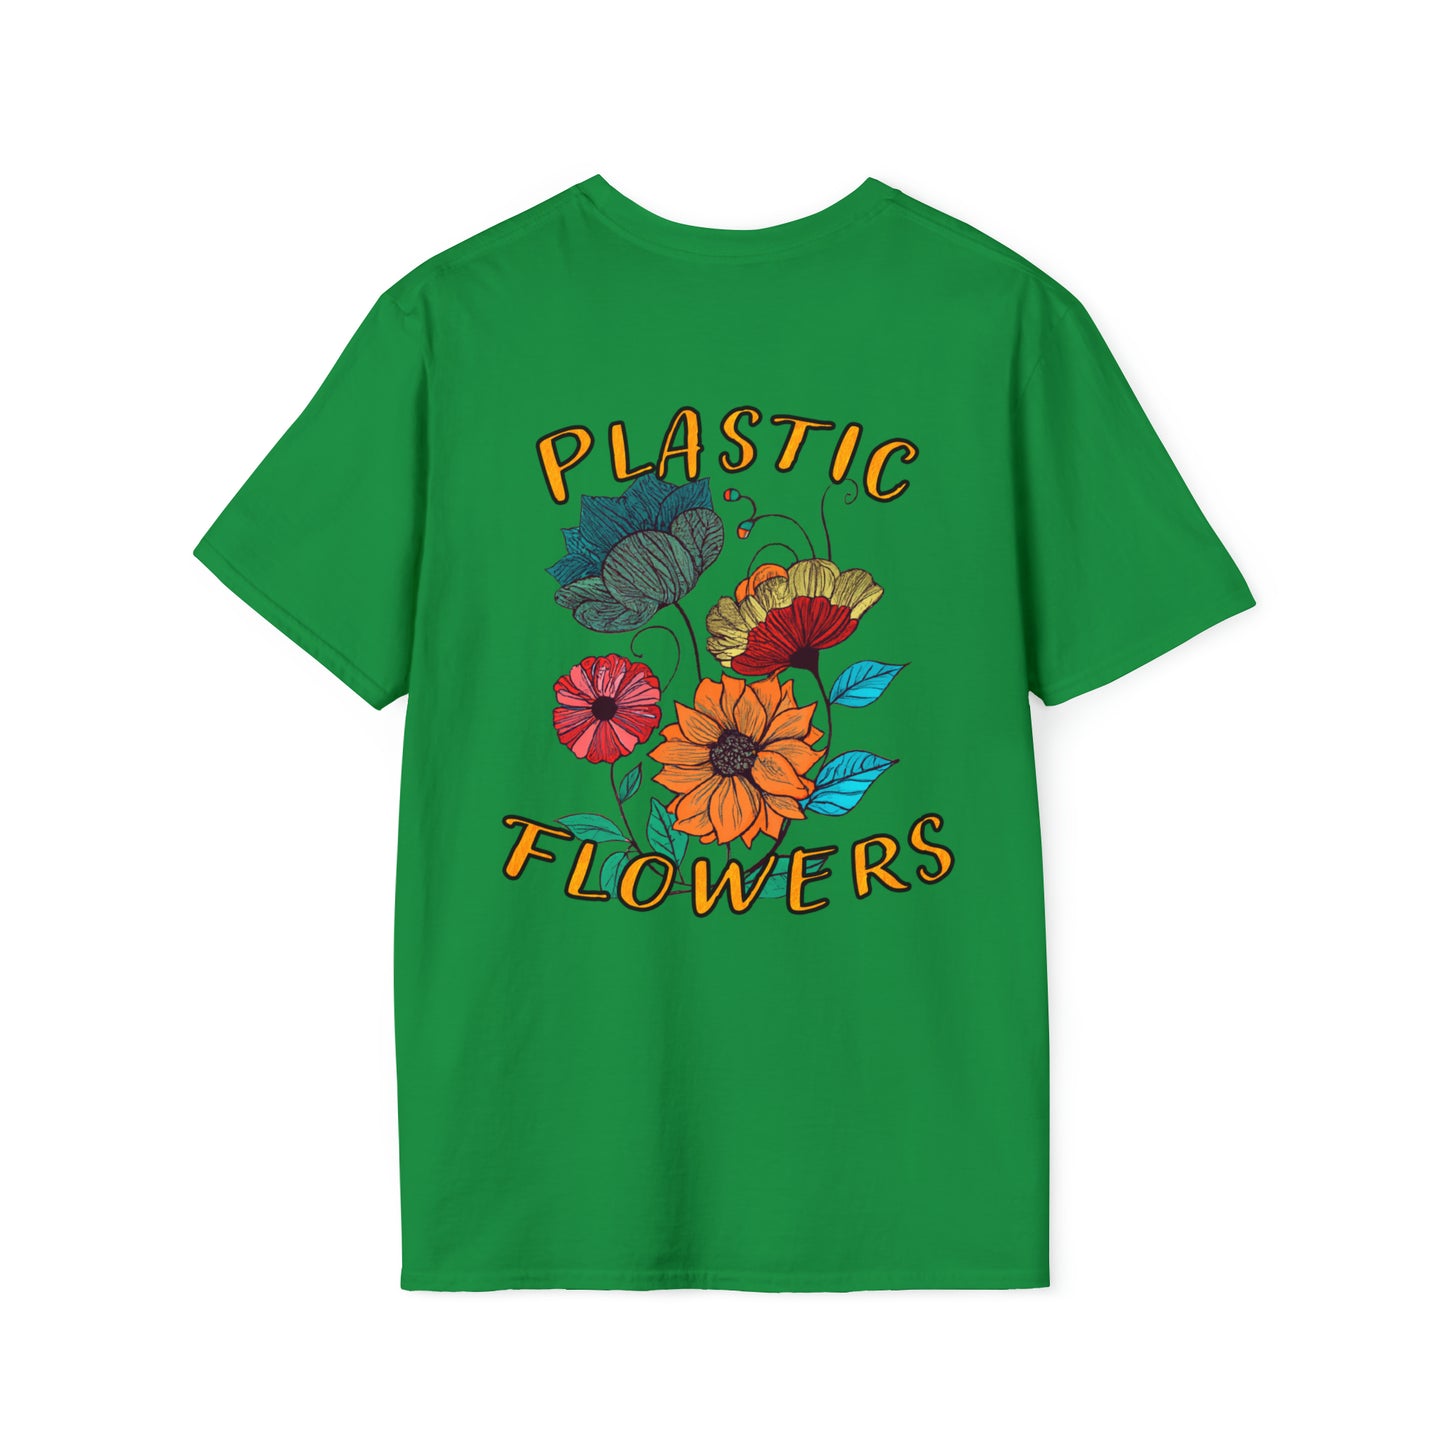 Bushflowers Shirt